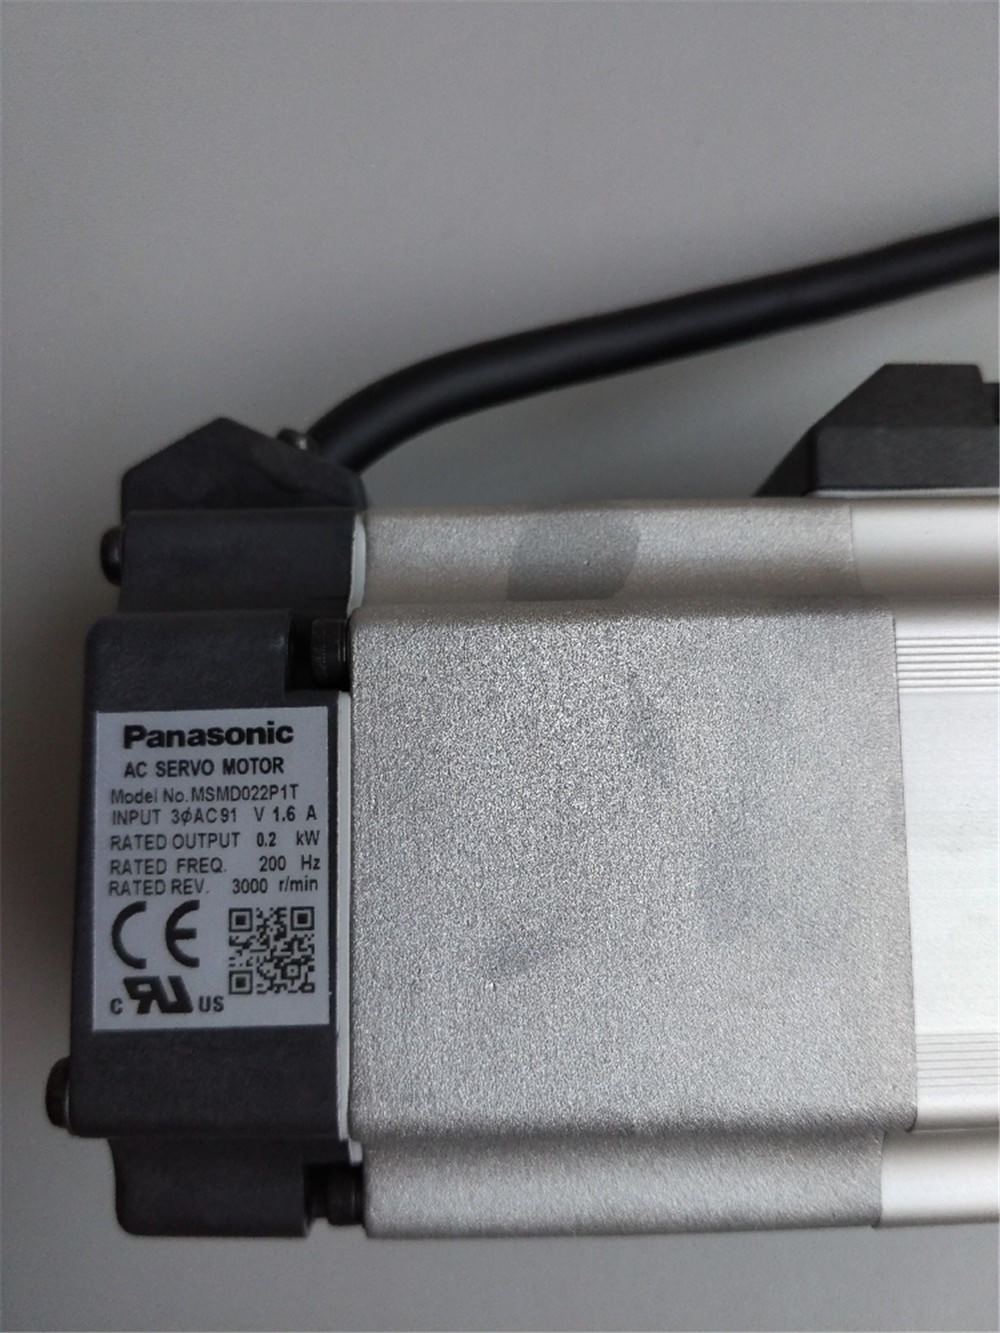 Brand New PANASONIC AC Servo motor MSMD022P1T in box - Click Image to Close